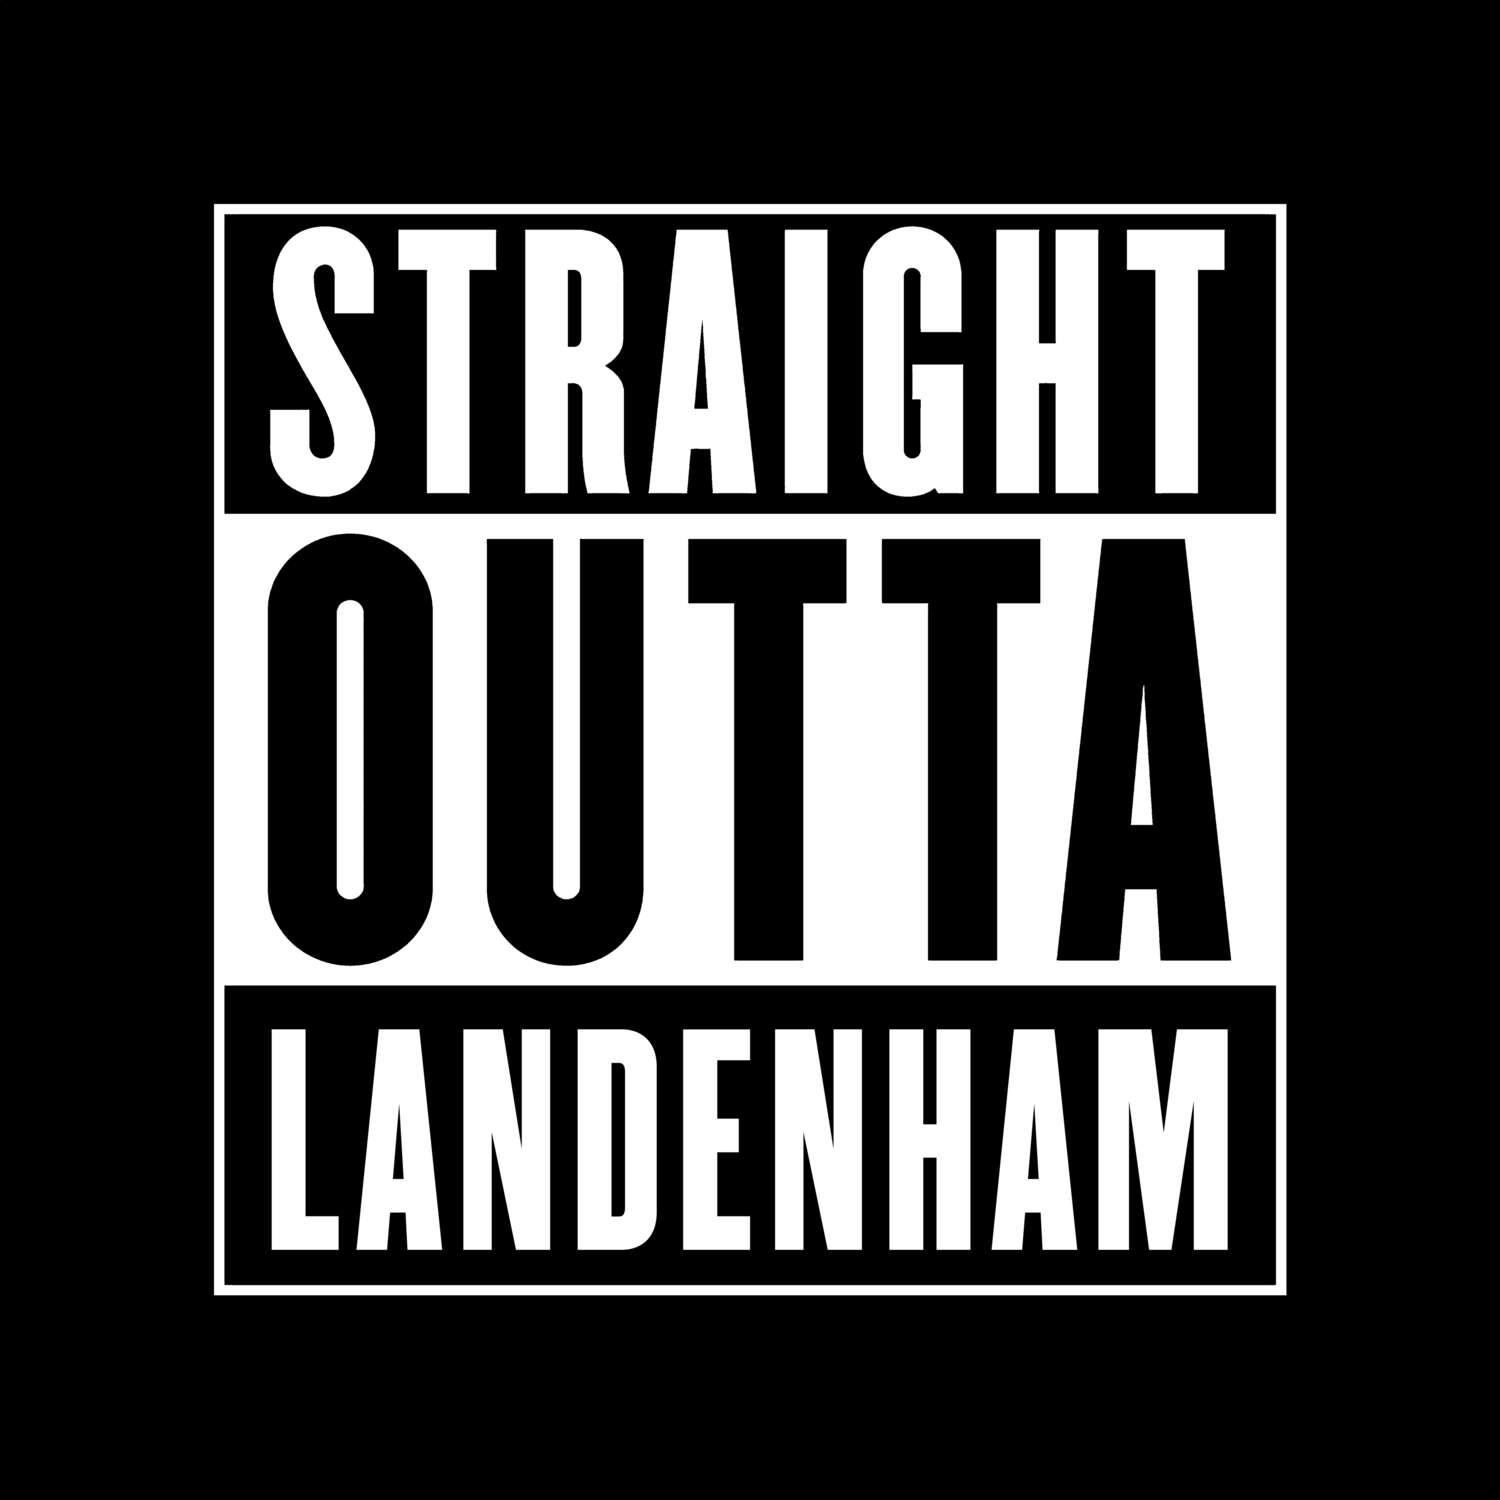 Landenham T-Shirt »Straight Outta«